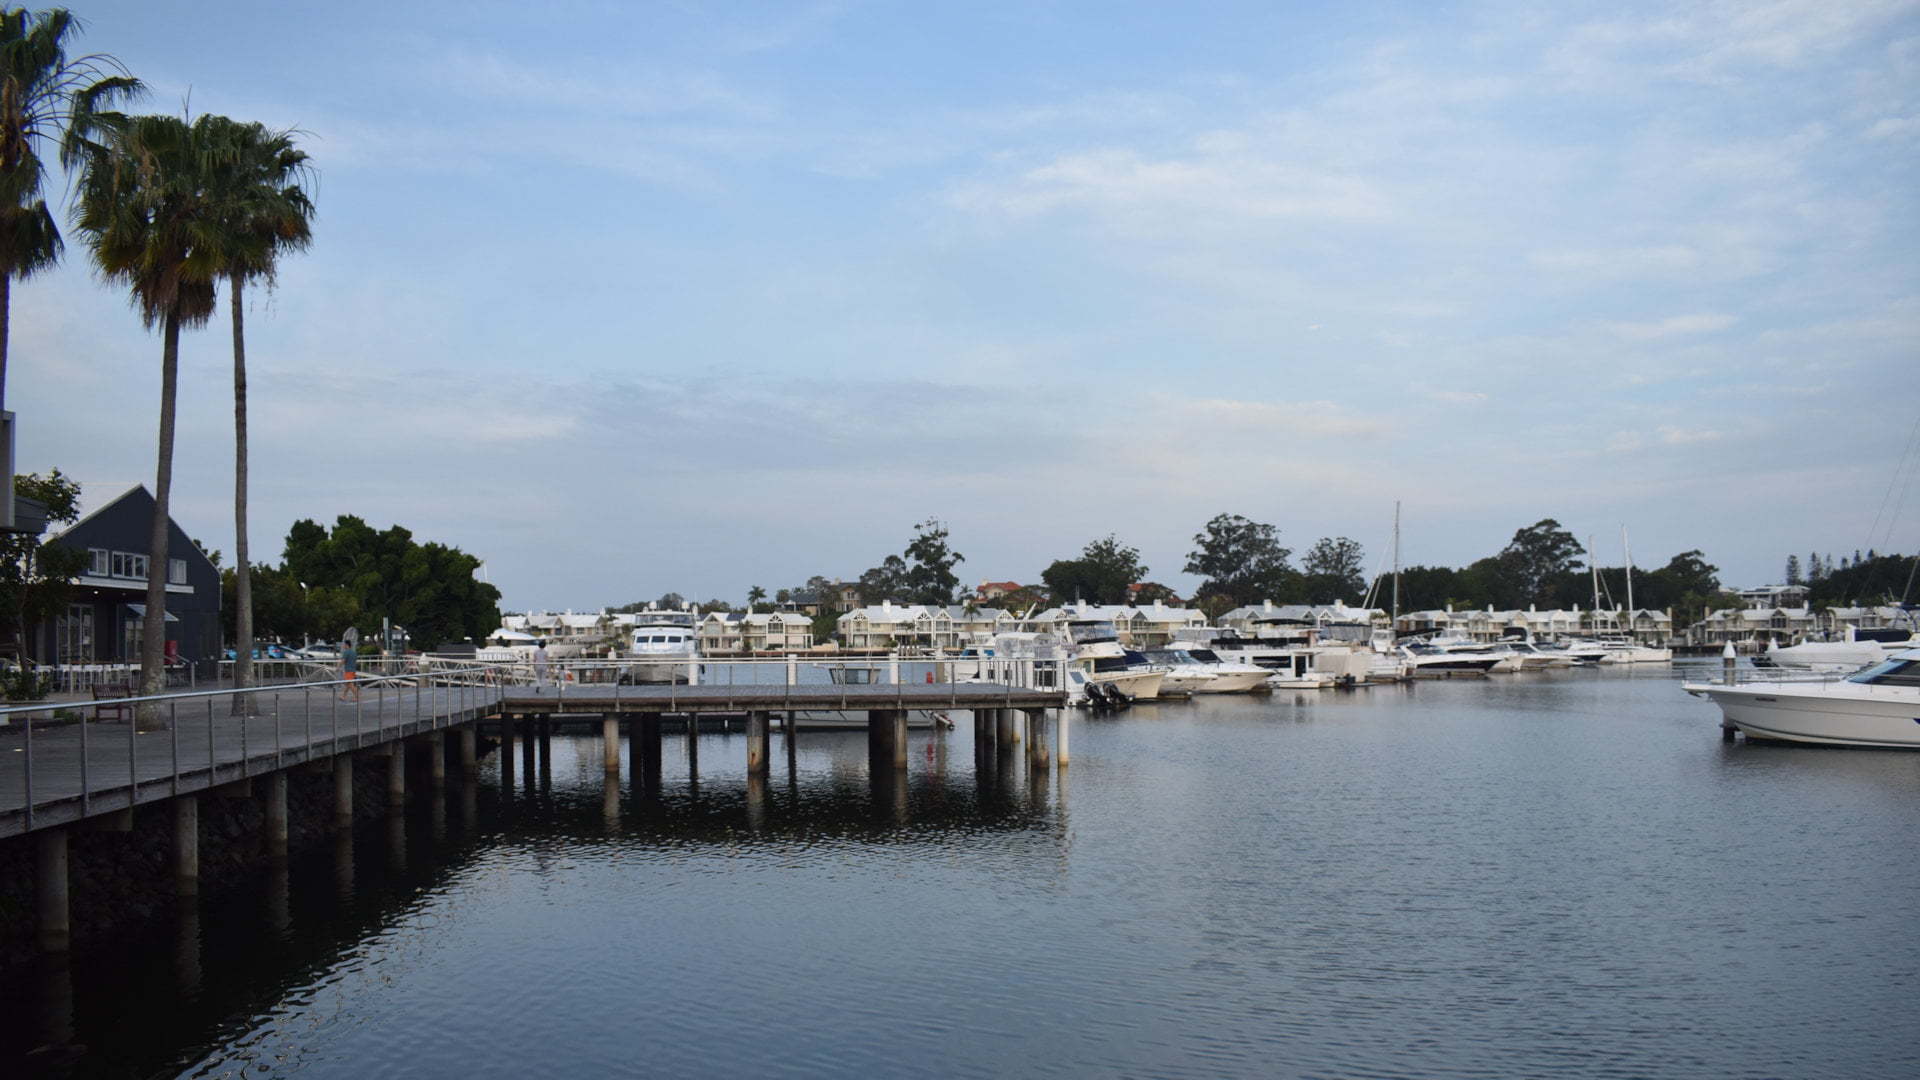 Marina, boardwalk wharf, and pier, at Sanctuary Cove